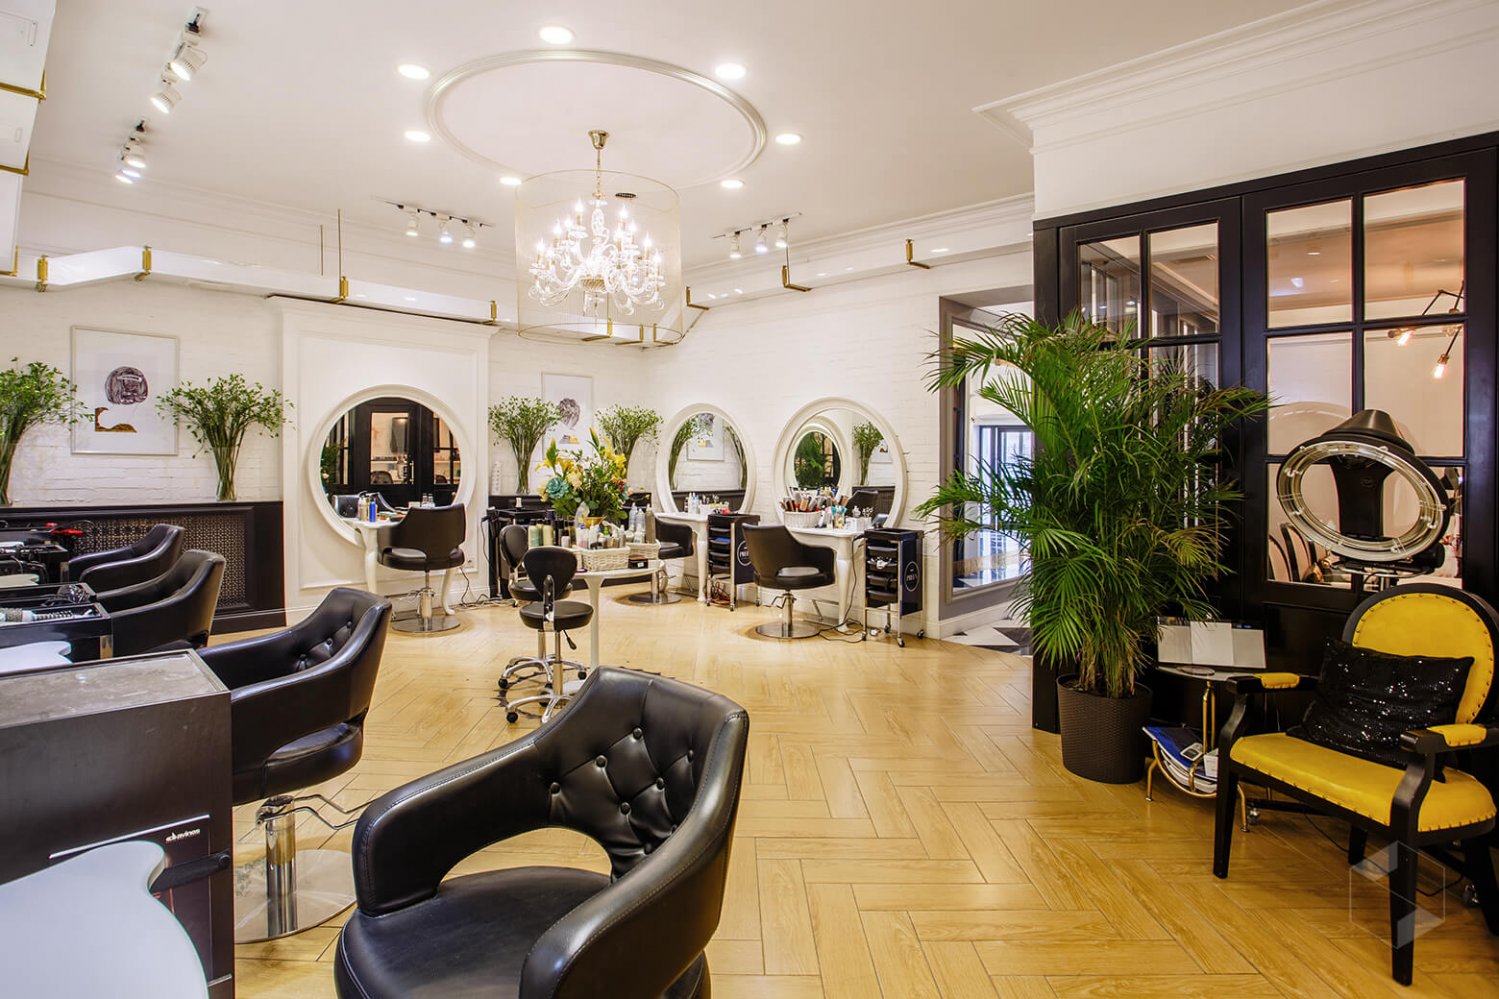 Preen beauty studio